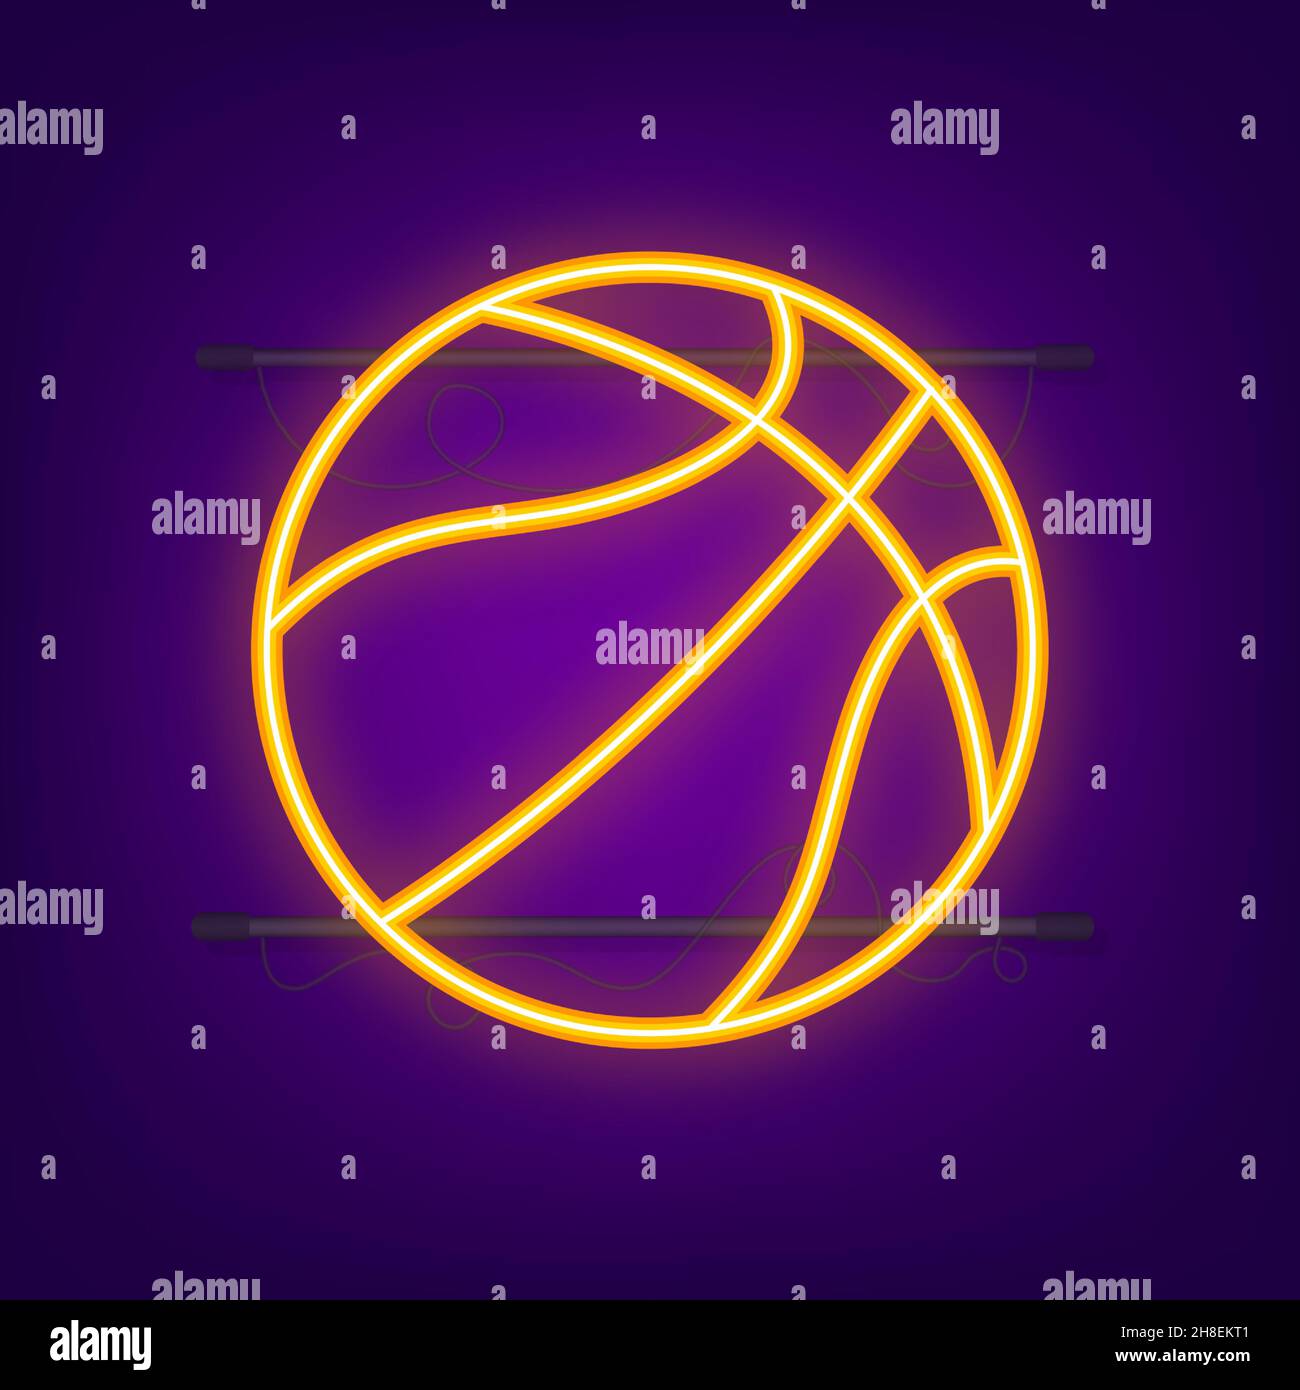 Basketball-Neonsymbol. Basketball-, Mannschaftsspiel- und Sportkonzept. Vektorgrafik Stock Vektor